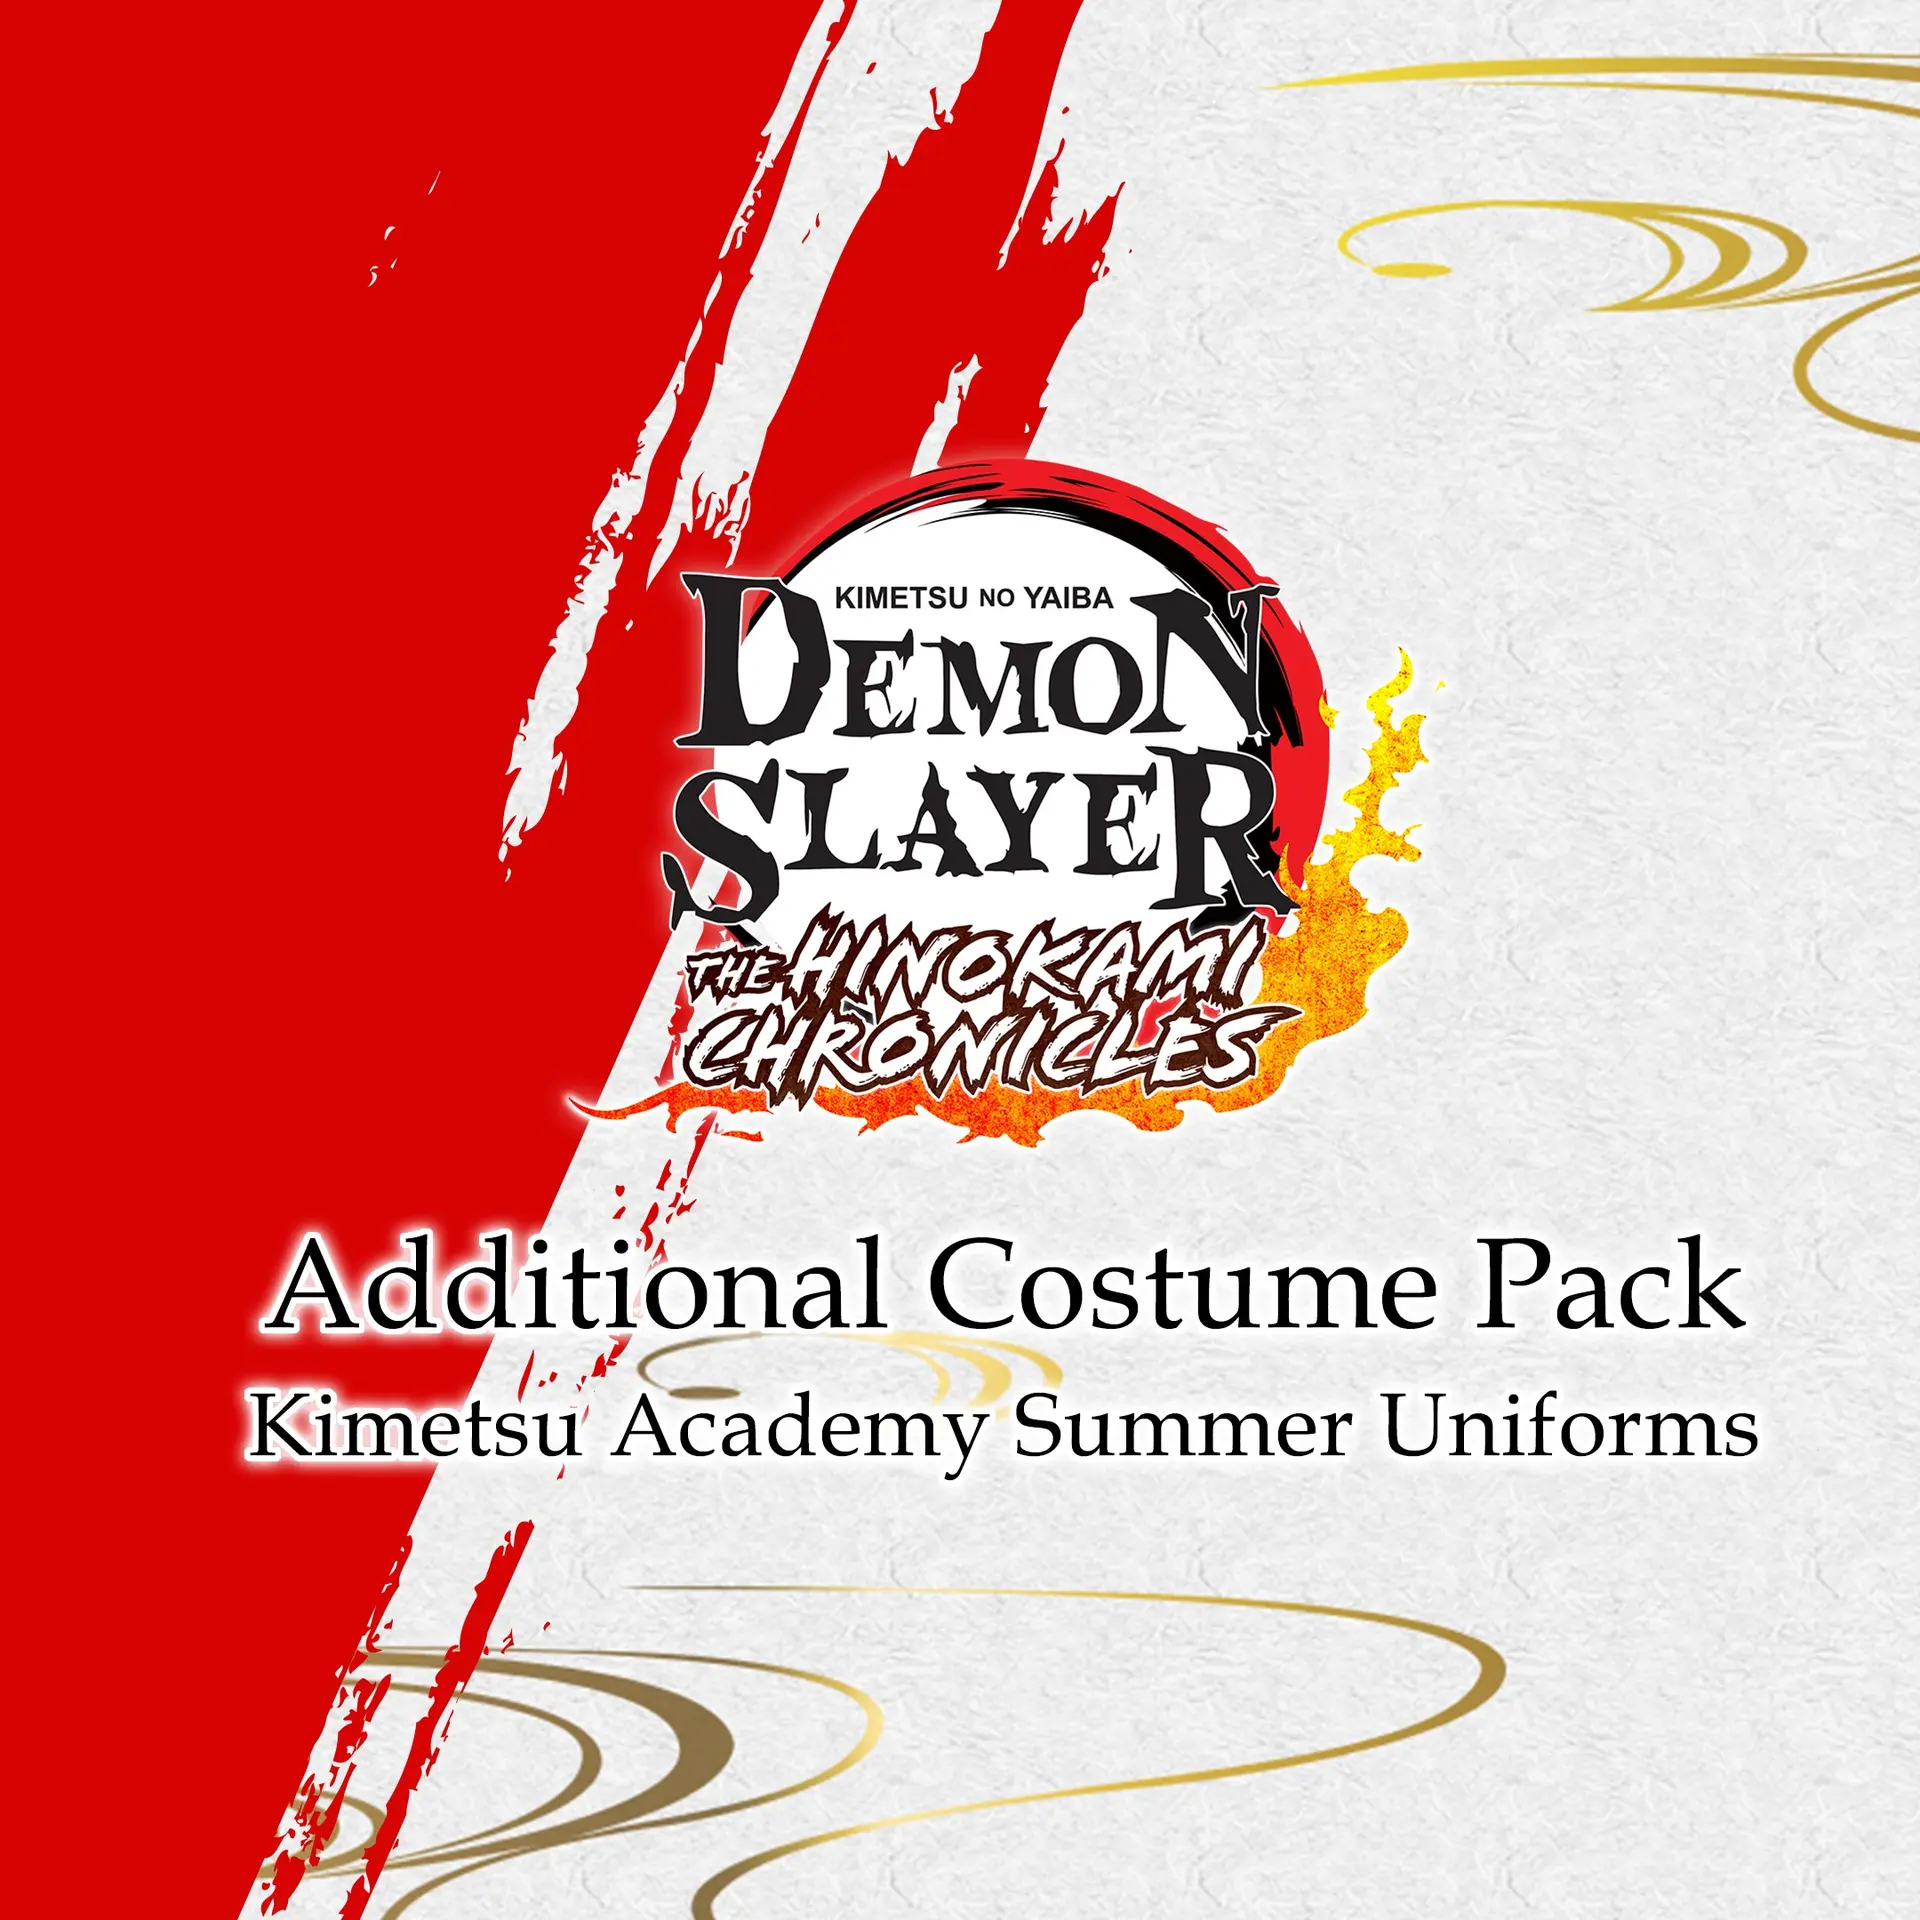 Additional Costume Pack - Kimetsu Academy Summer Uniforms (Xbox Games US)